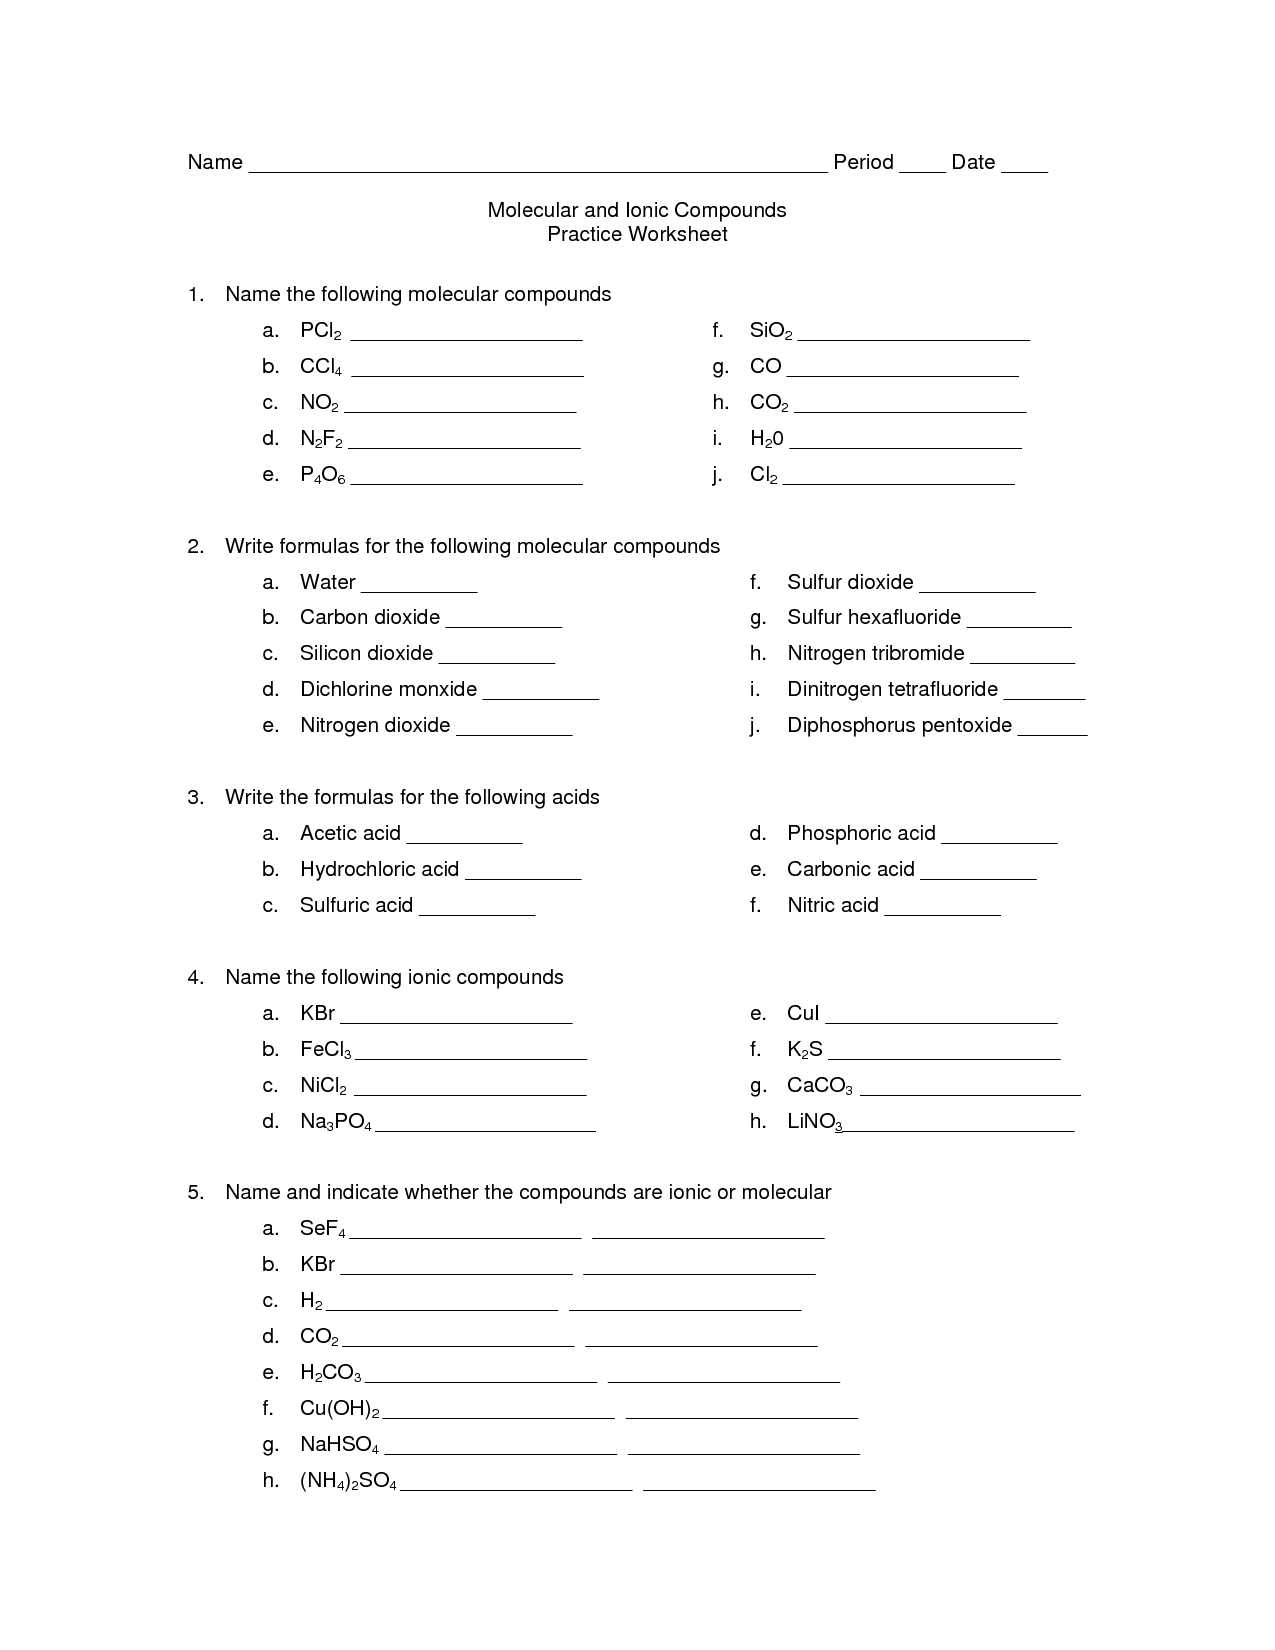 Writing Binary formulas Worksheet or Chemical Names and formulas Worksheet Answers Choice Image